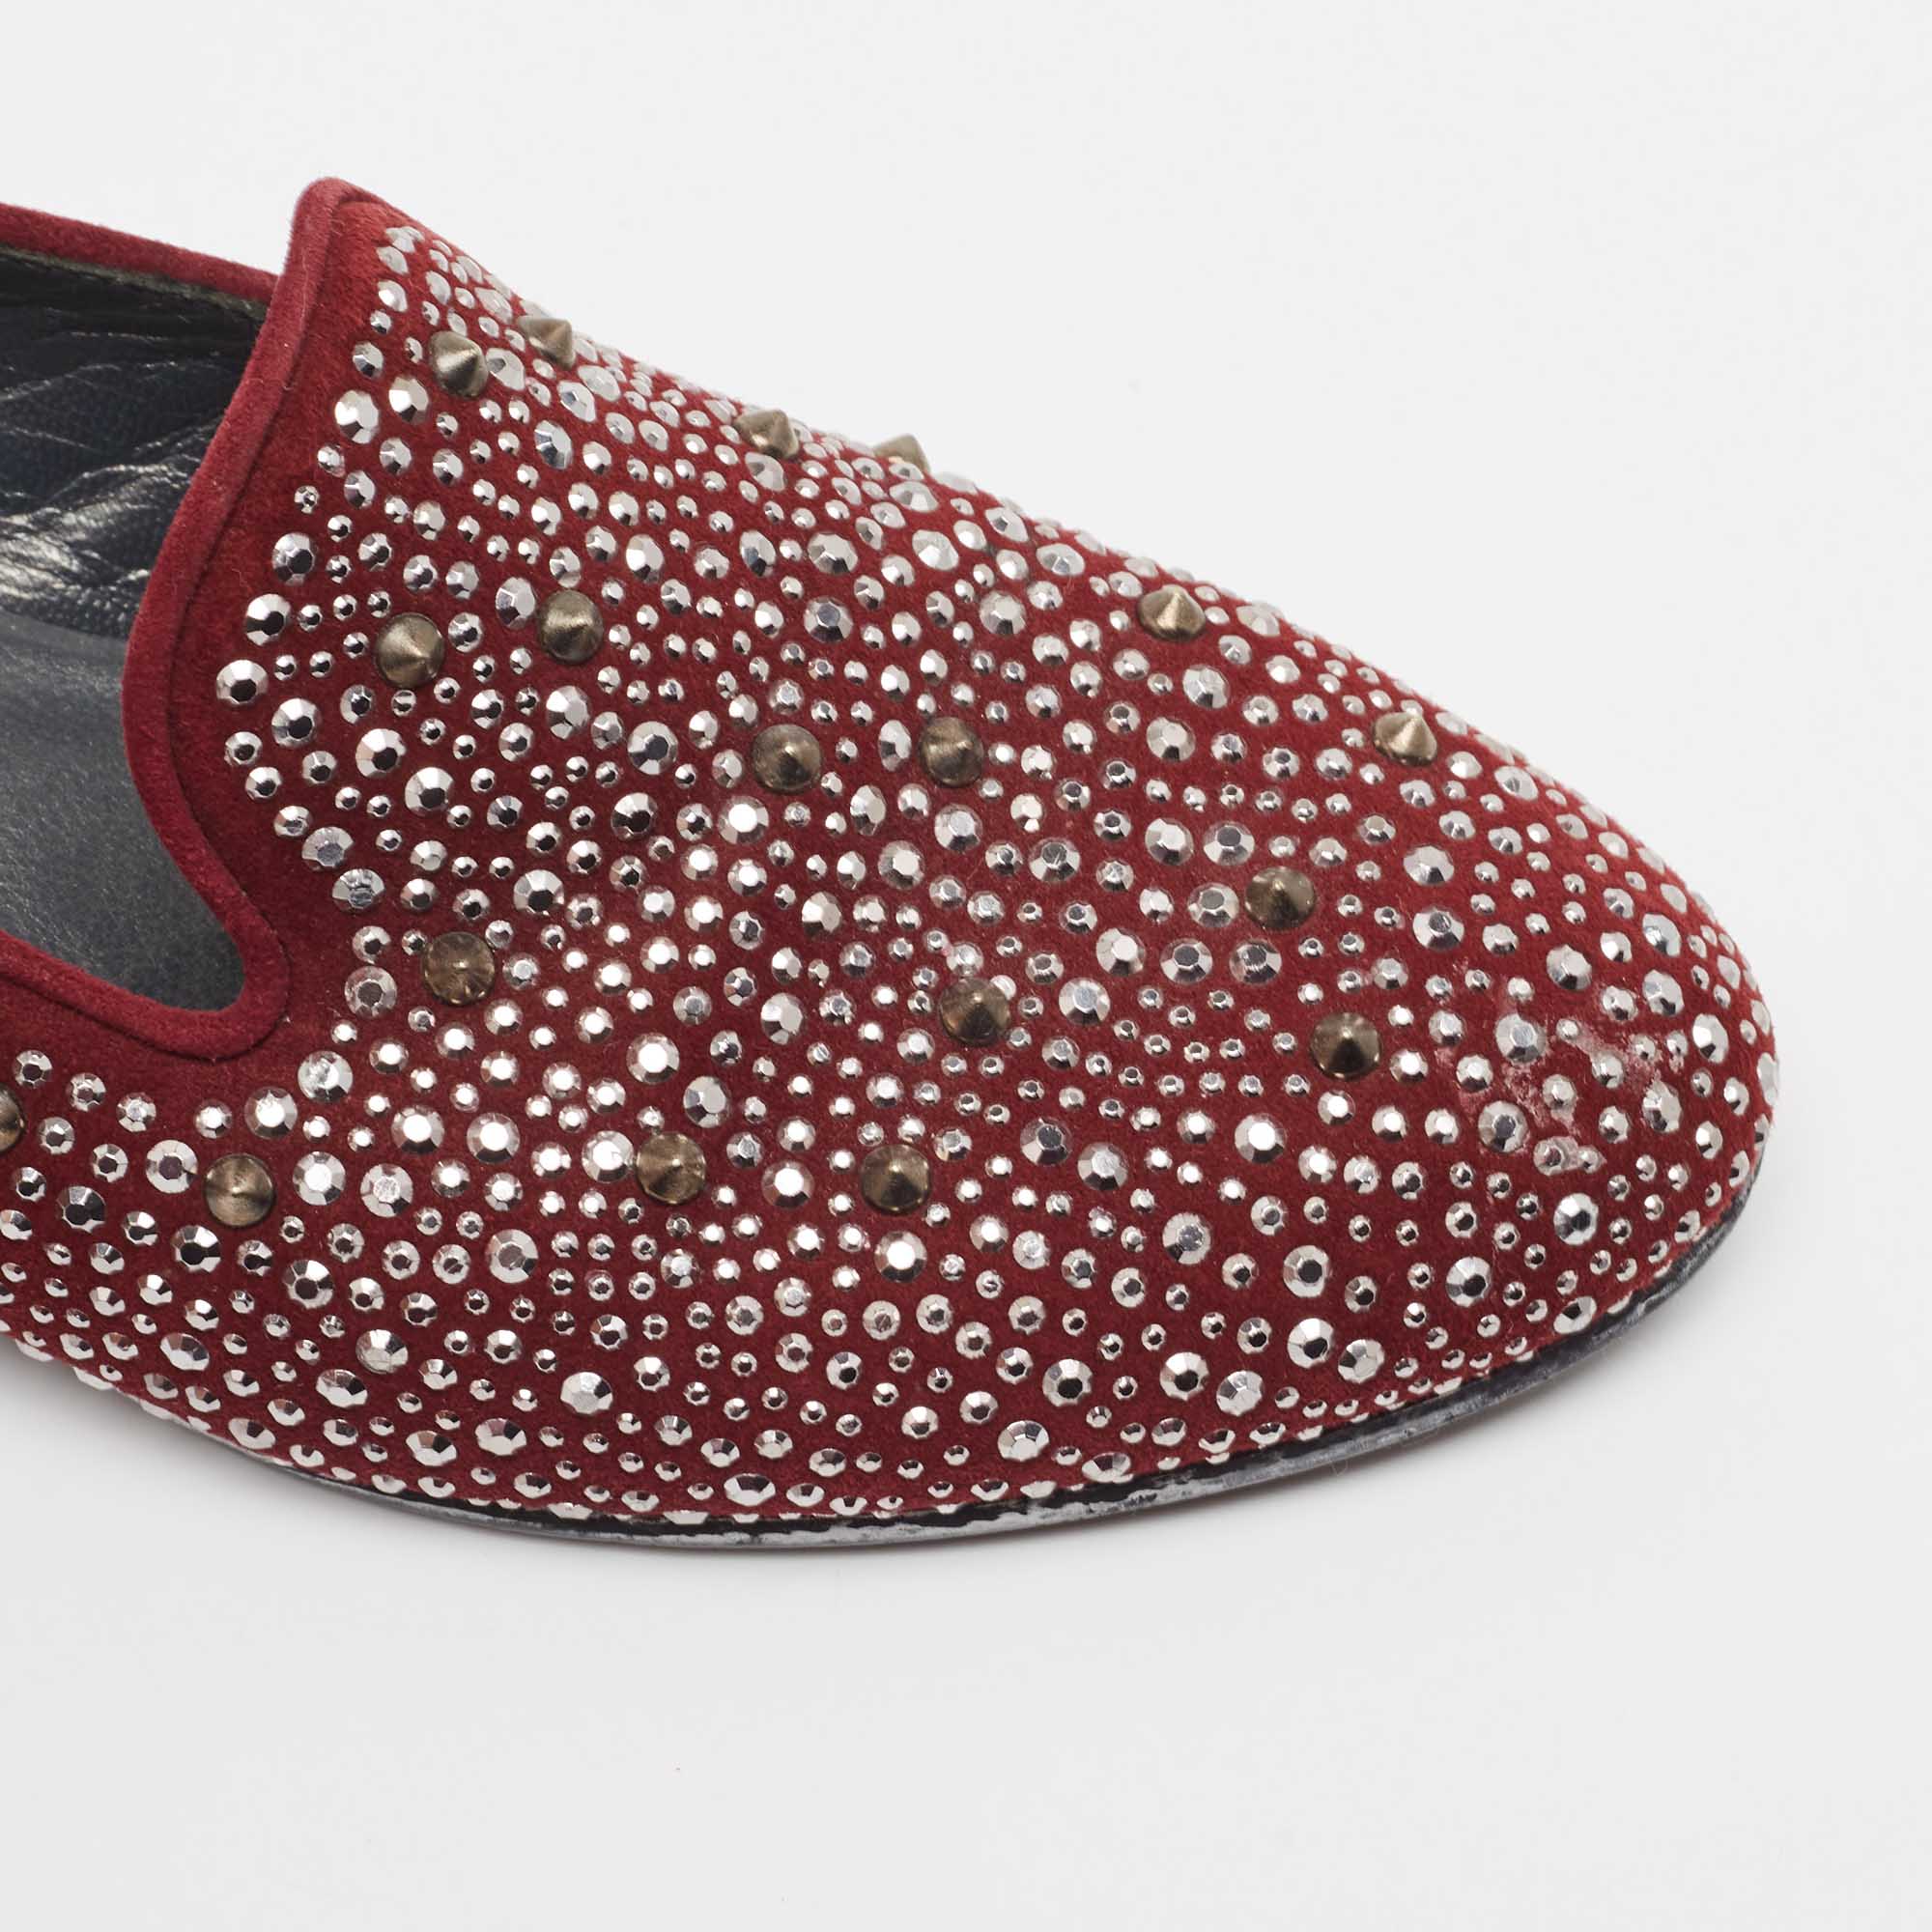 Stuart Weitzman Burgundy Suede Crystal Embellished Studded Smoking Slippers Size 37.5